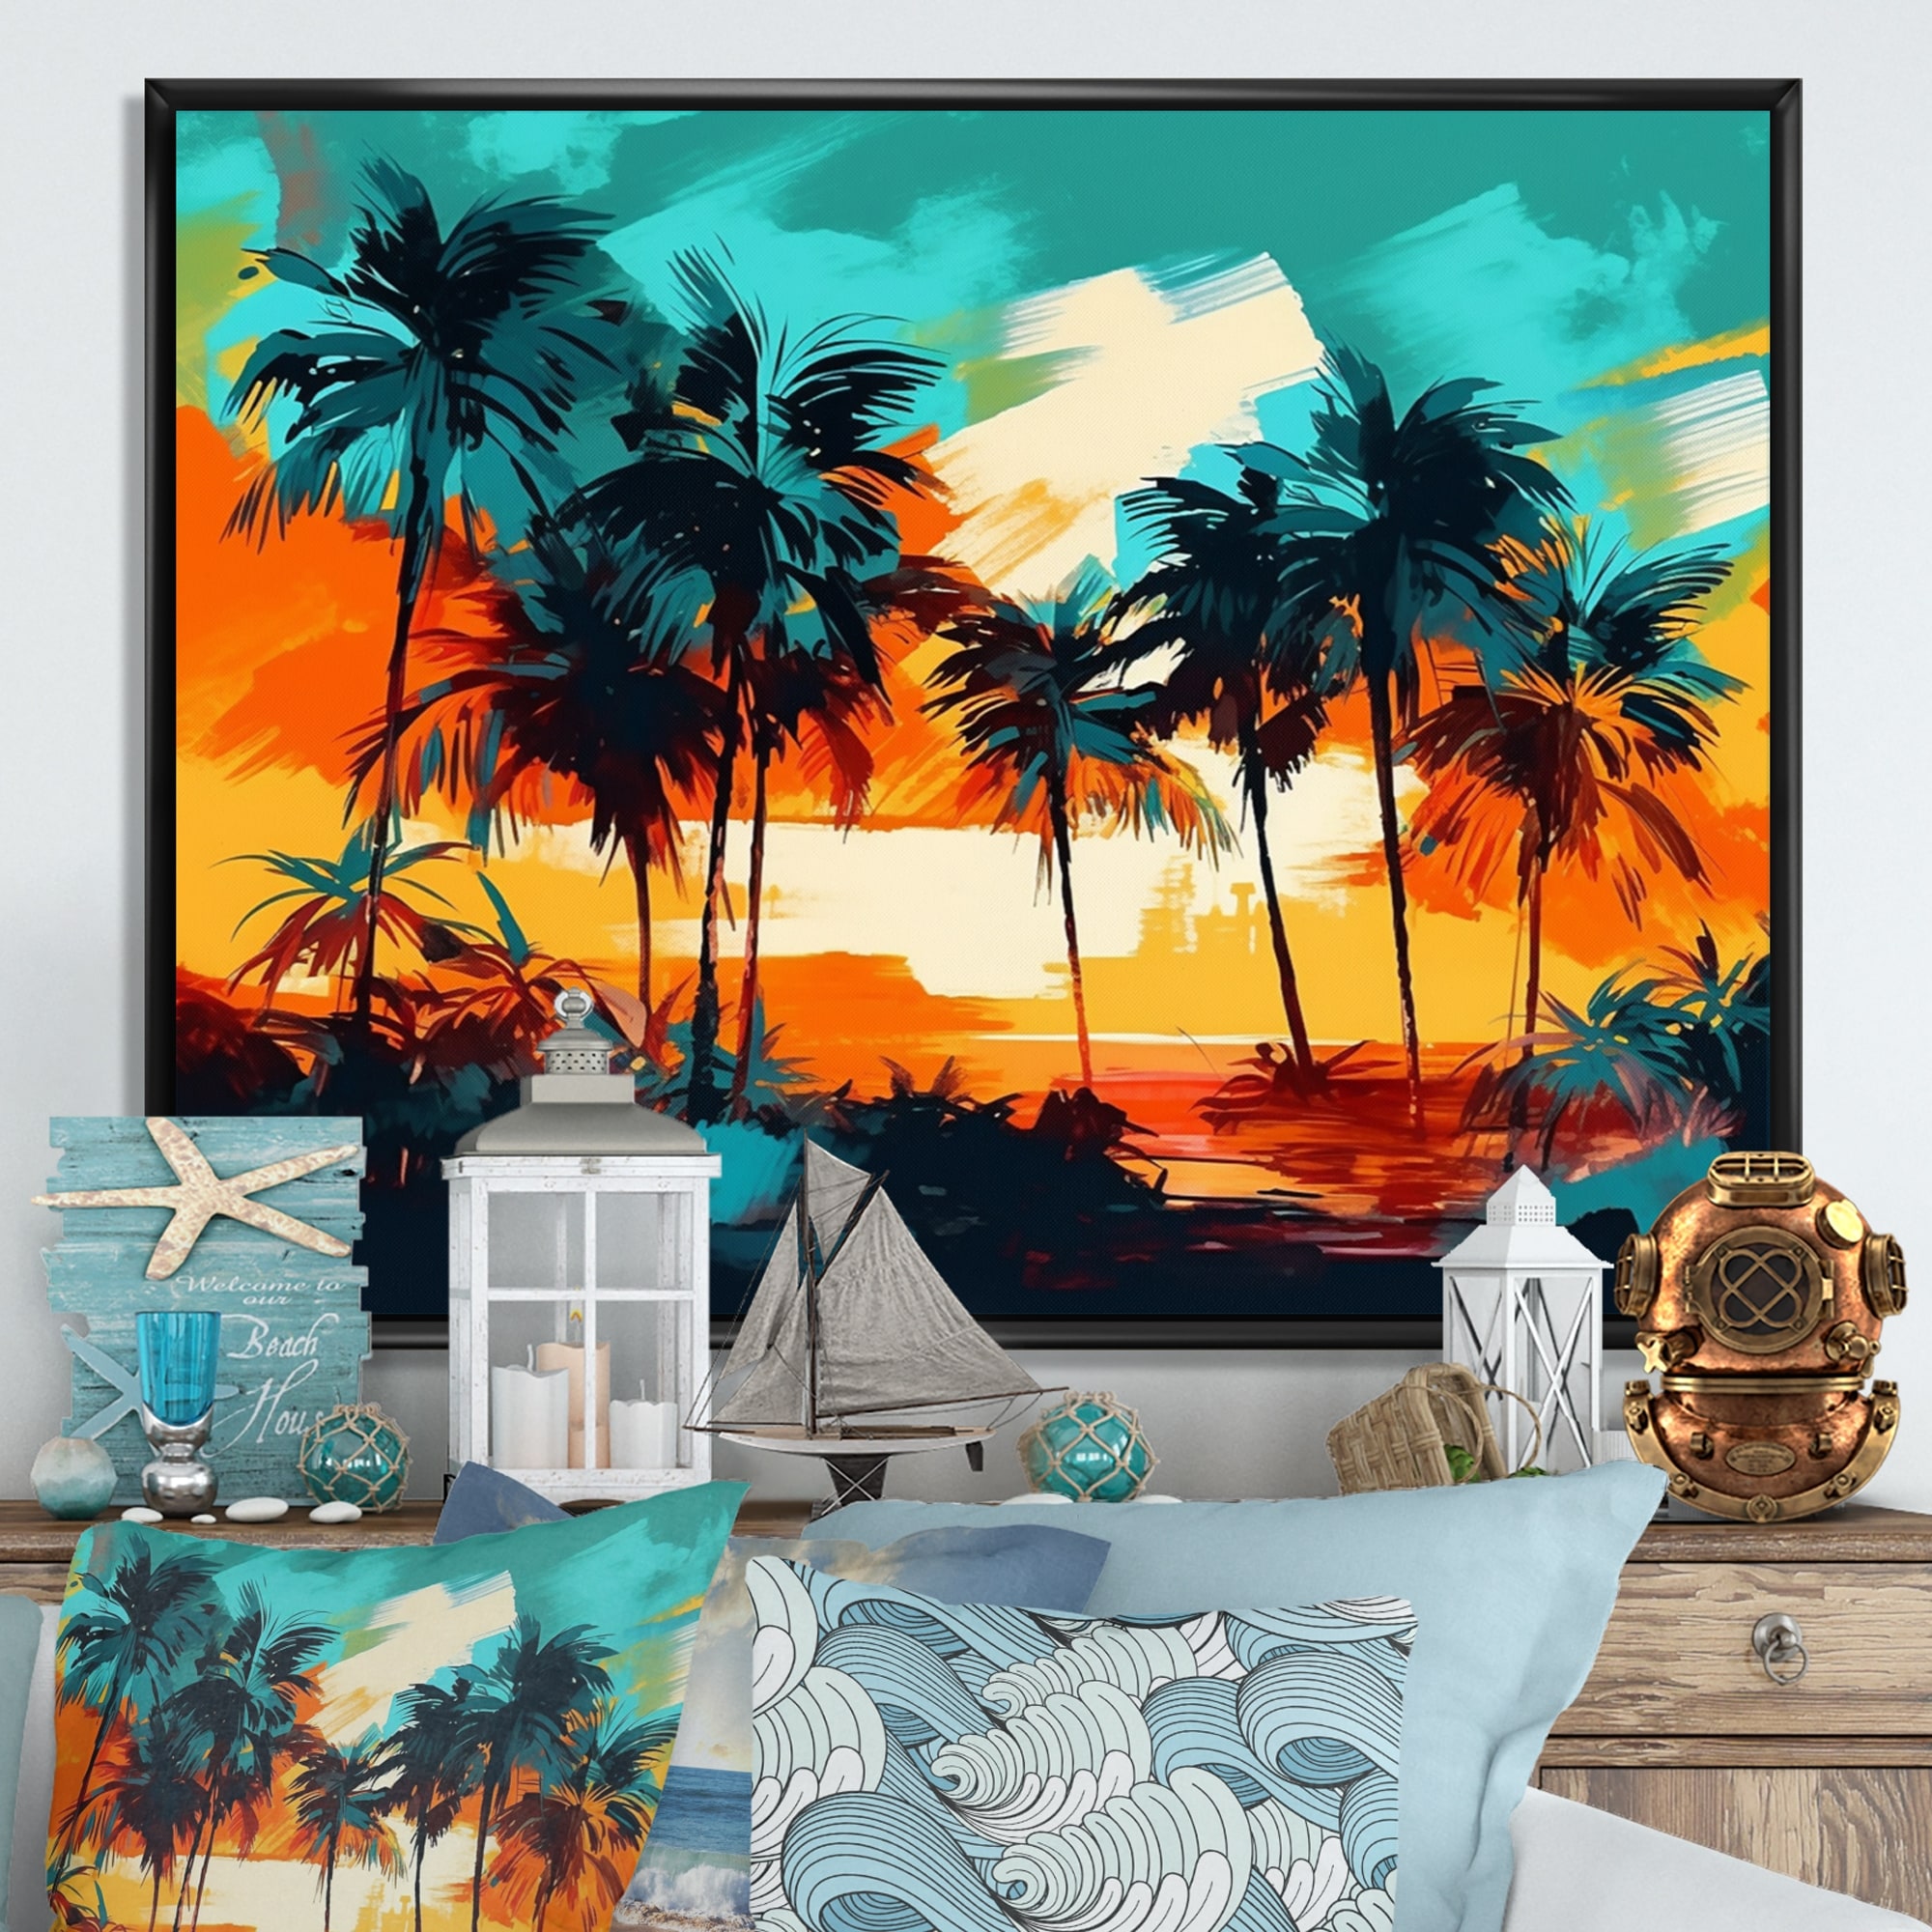 Designart "Vibrant Palm Trees Iv" Modern Landscape Beach Framed Wall Art  For Living Room Bed Bath  Beyond 38009602